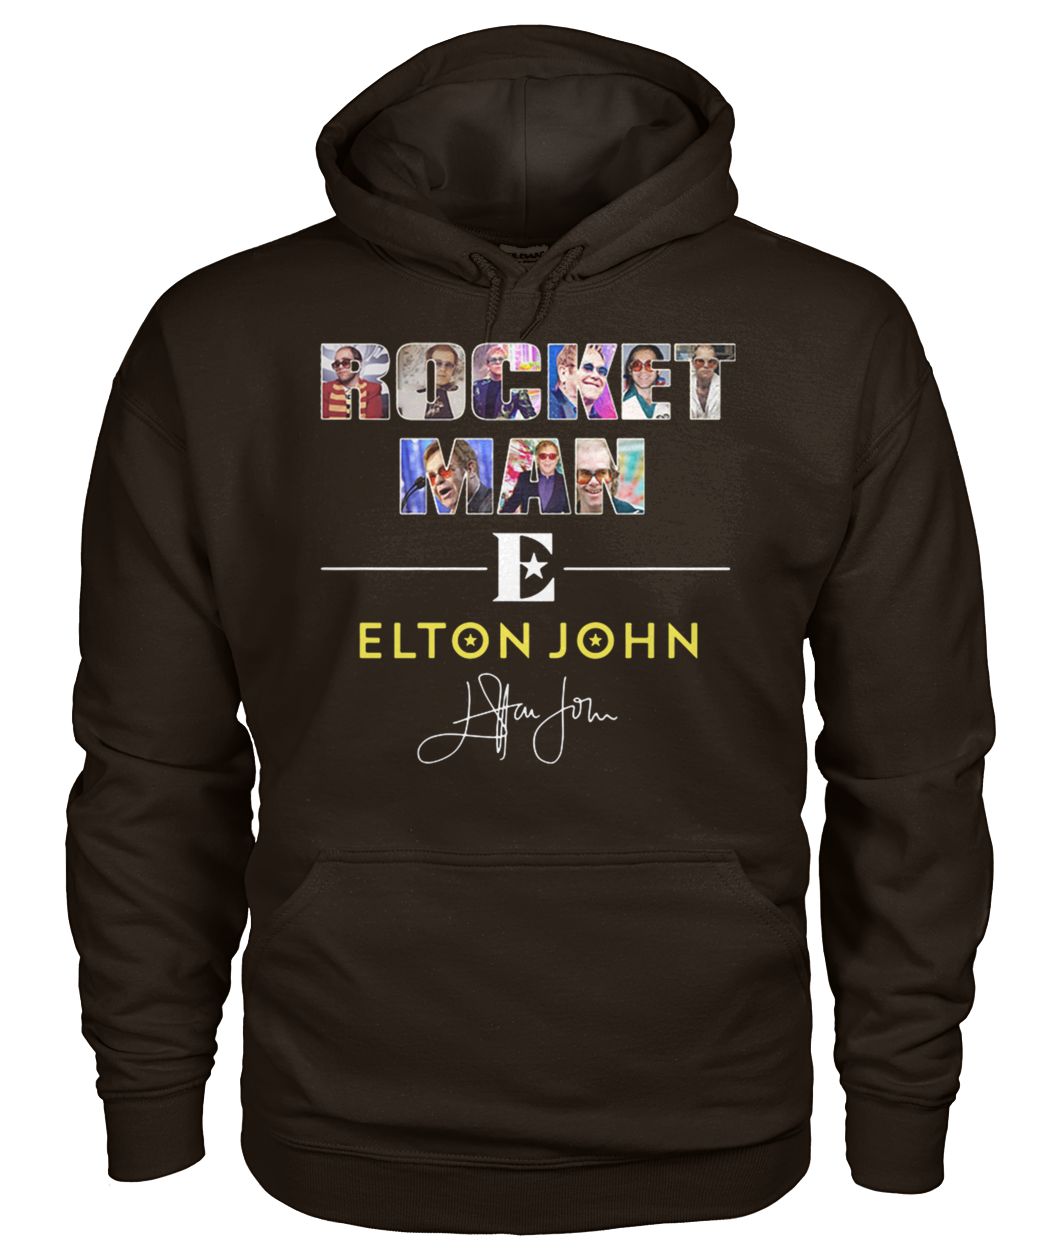 Rocket man elton john signature gildan hoodie